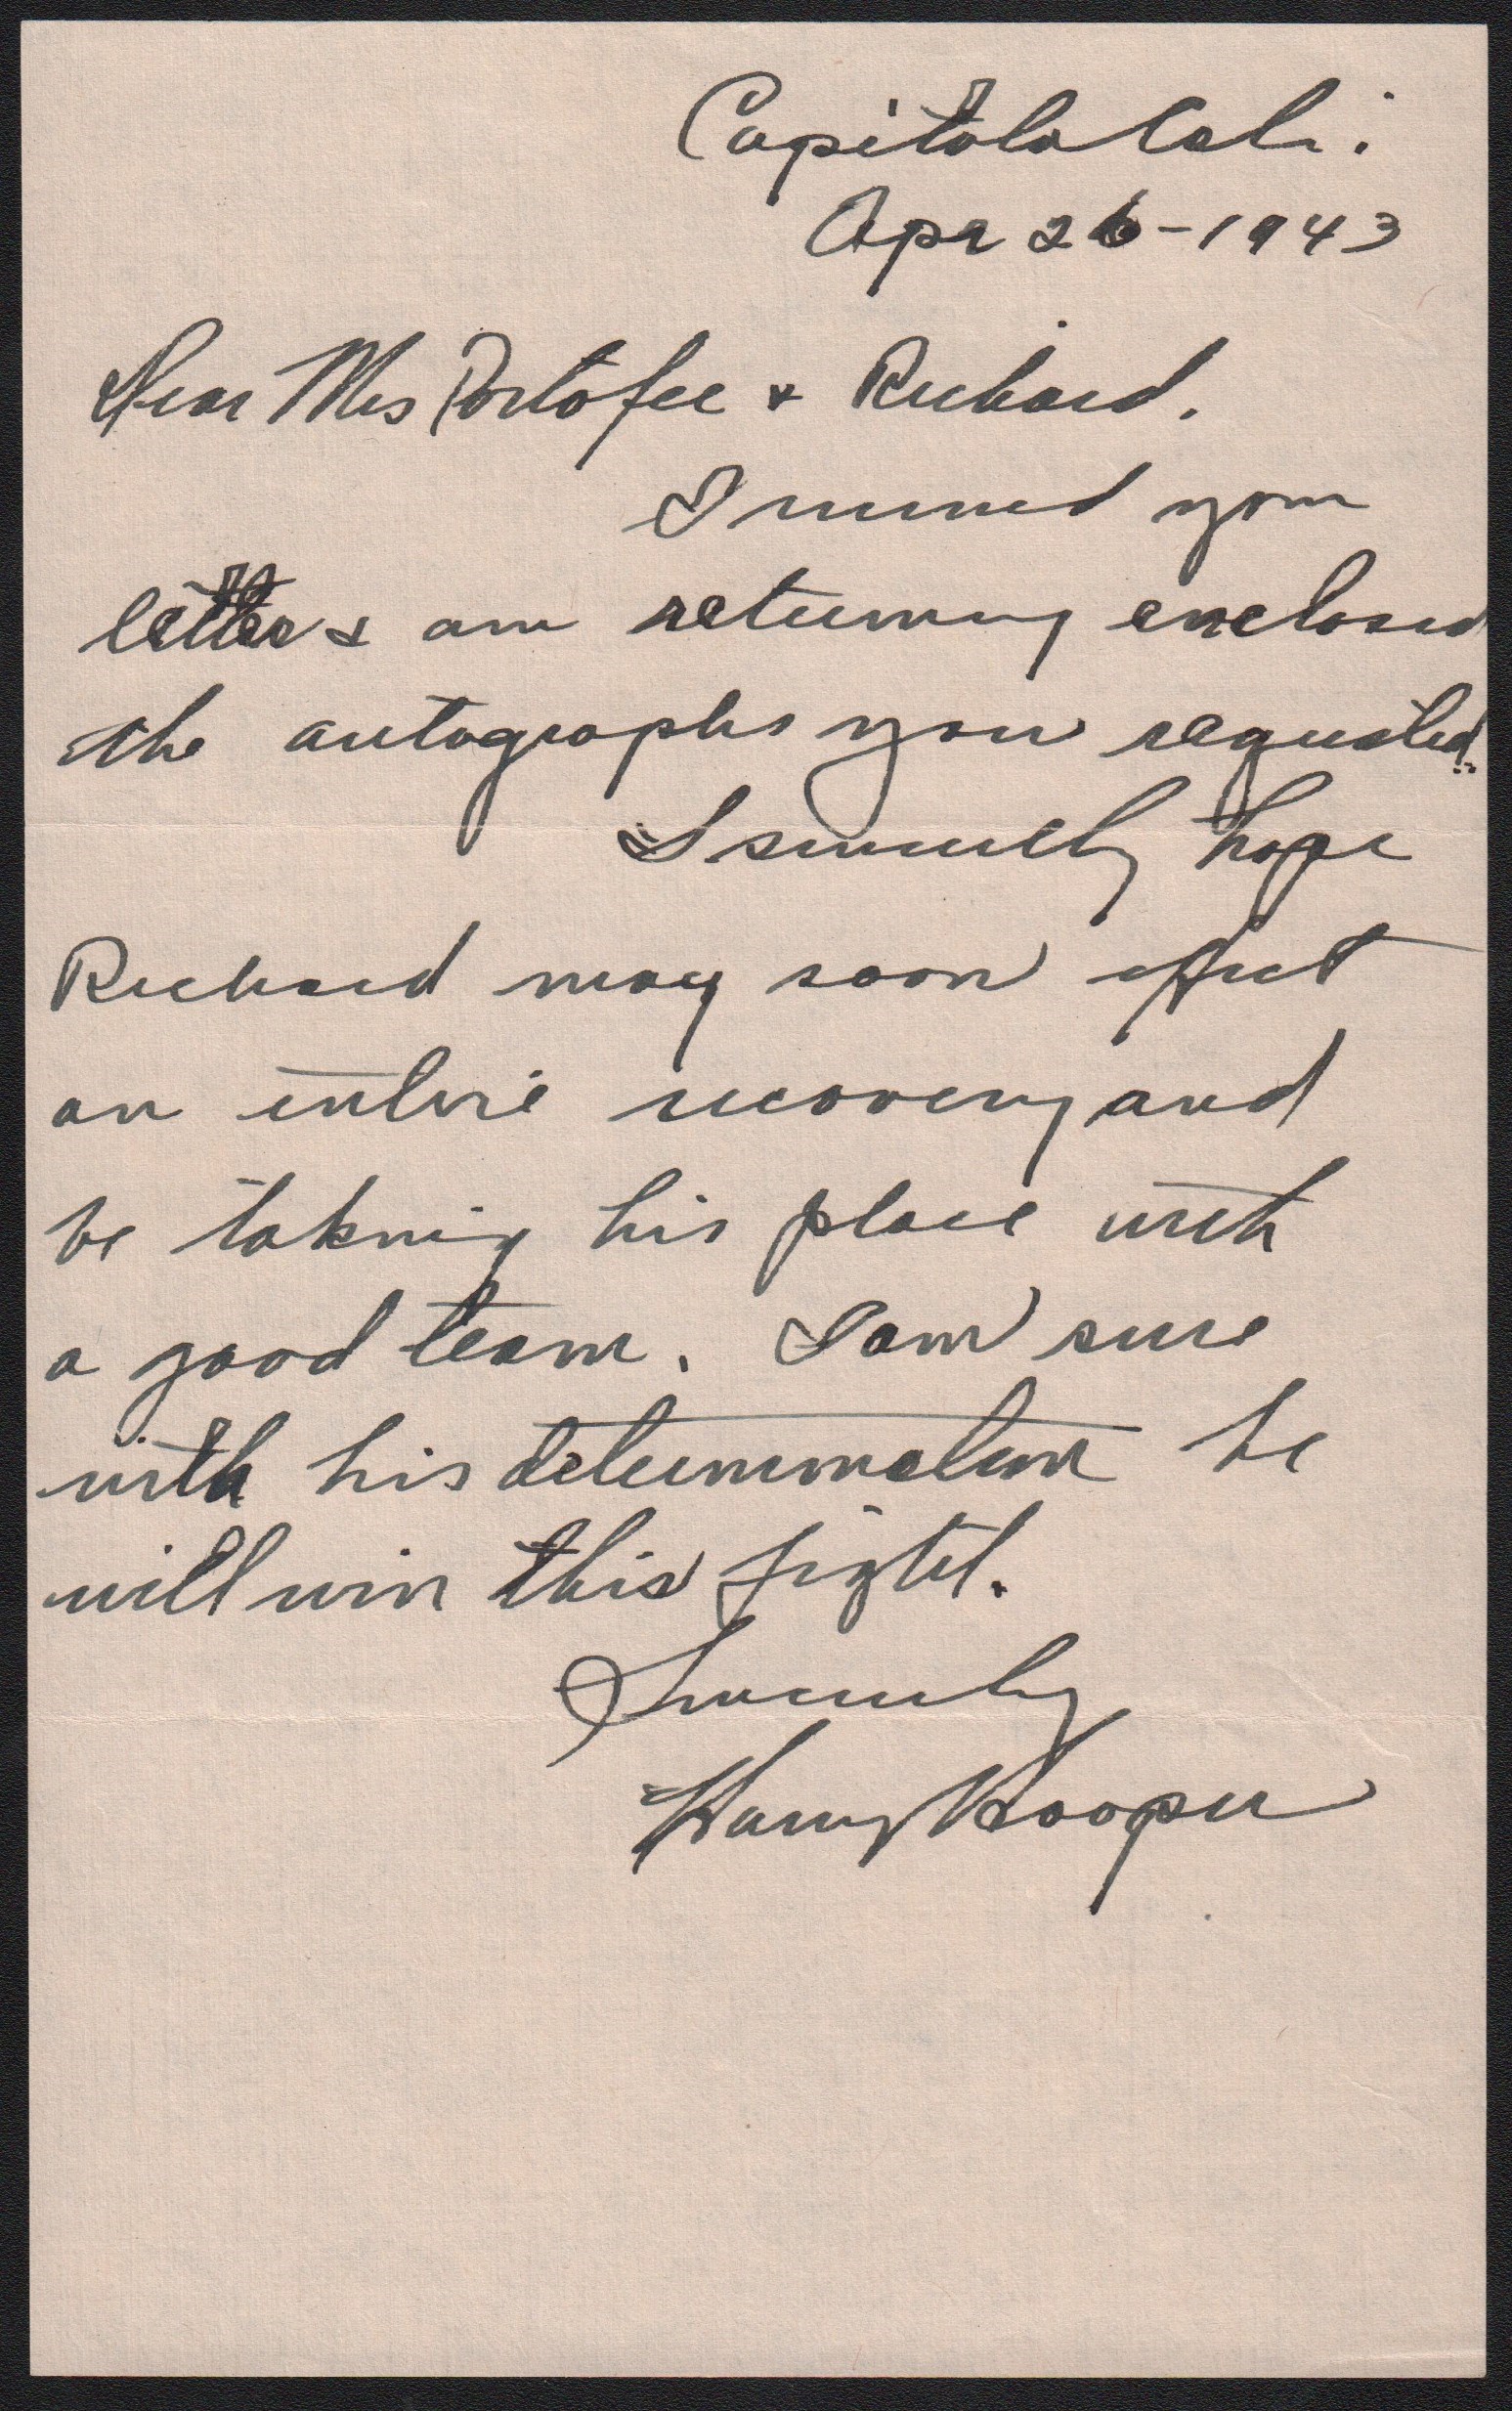 Harry Hooper Handwritten Letter